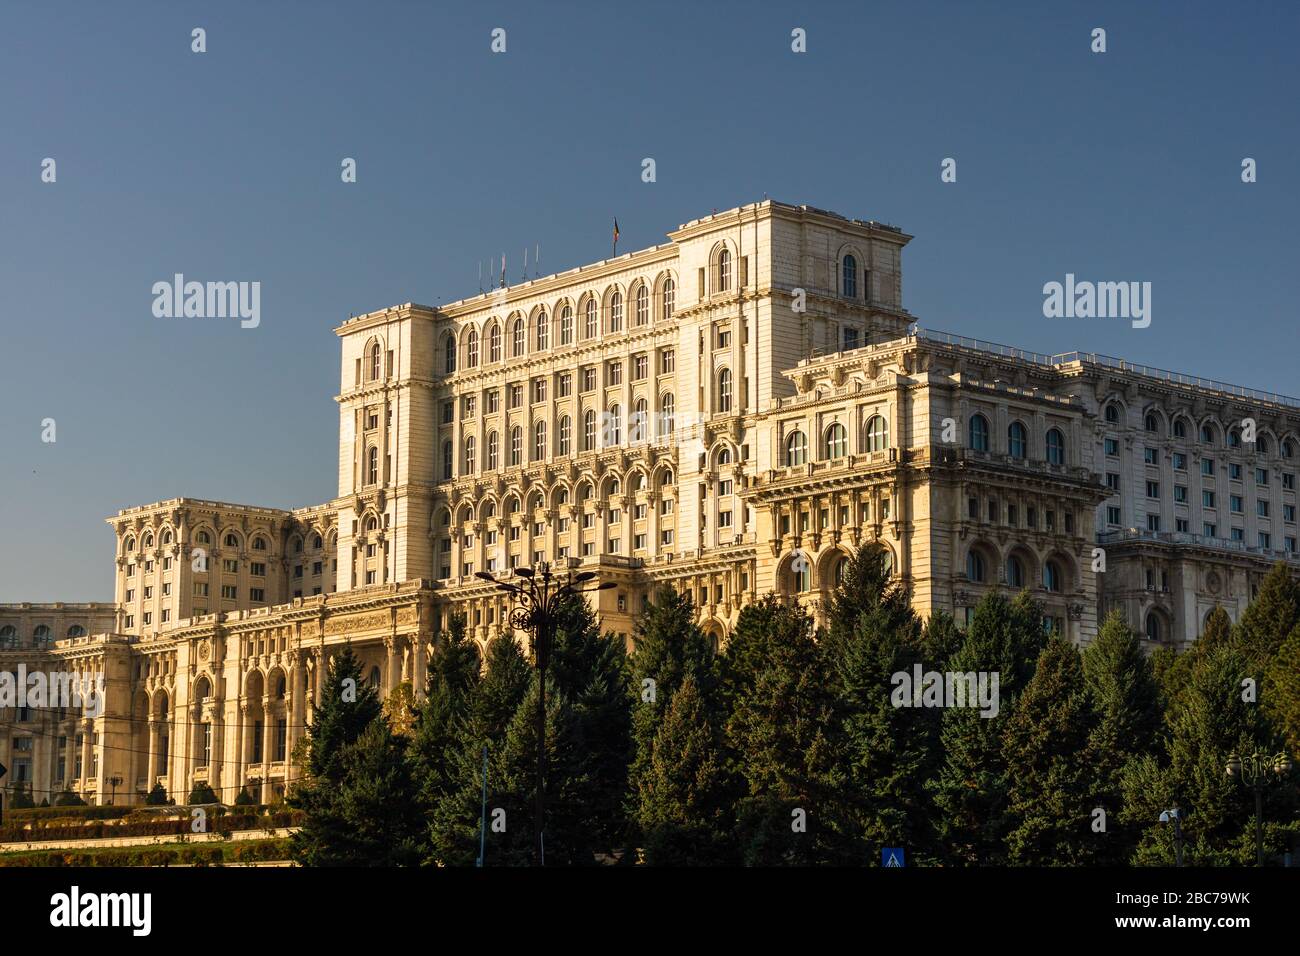 Famous Palace of the Parliament (Palatul Parlamentului) in Bucharest, capital of Romania Stock Photo